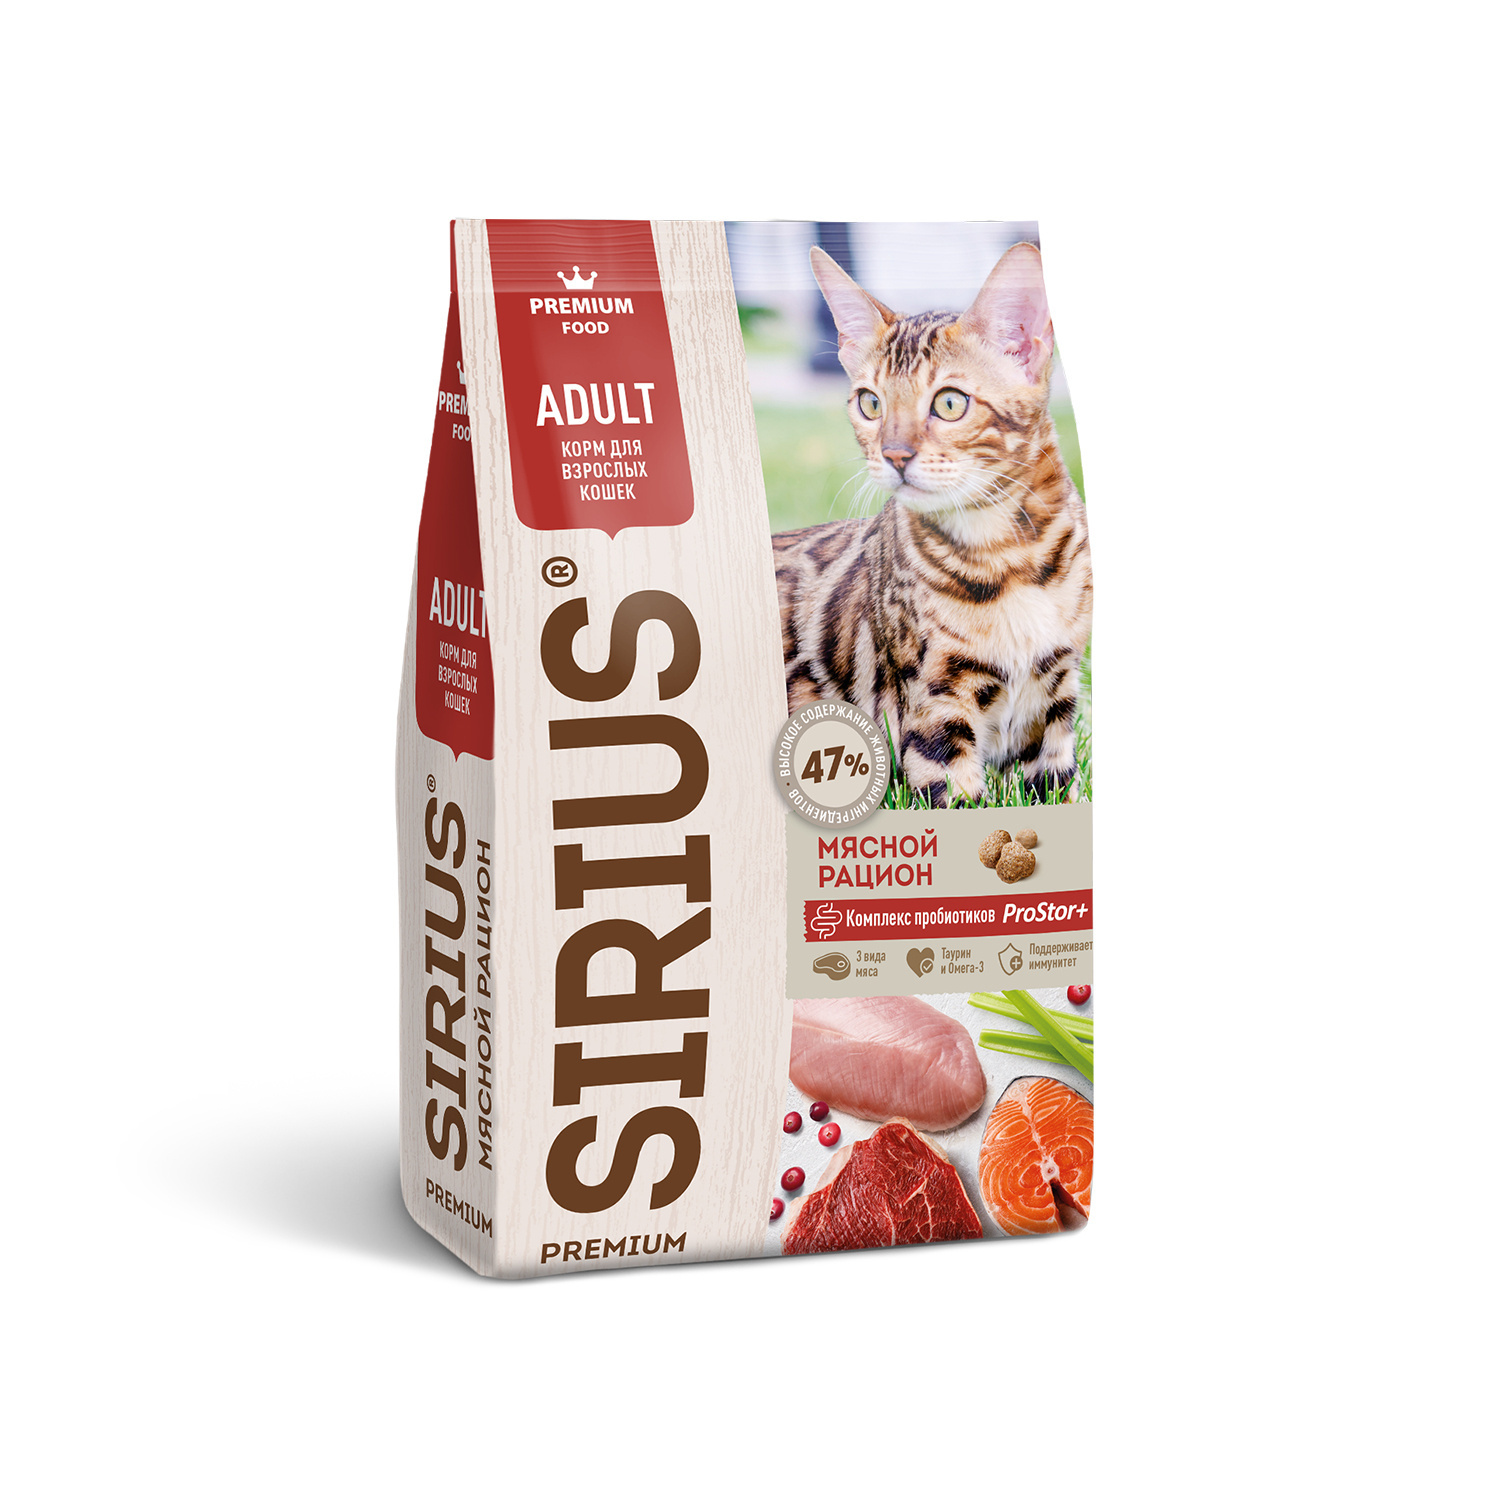 Sirius Sirius сухой корм для кошек, мясной рацион (10 кг) sirius sirius сухой корм для стерилизованных кошек утка и клюква 10 кг